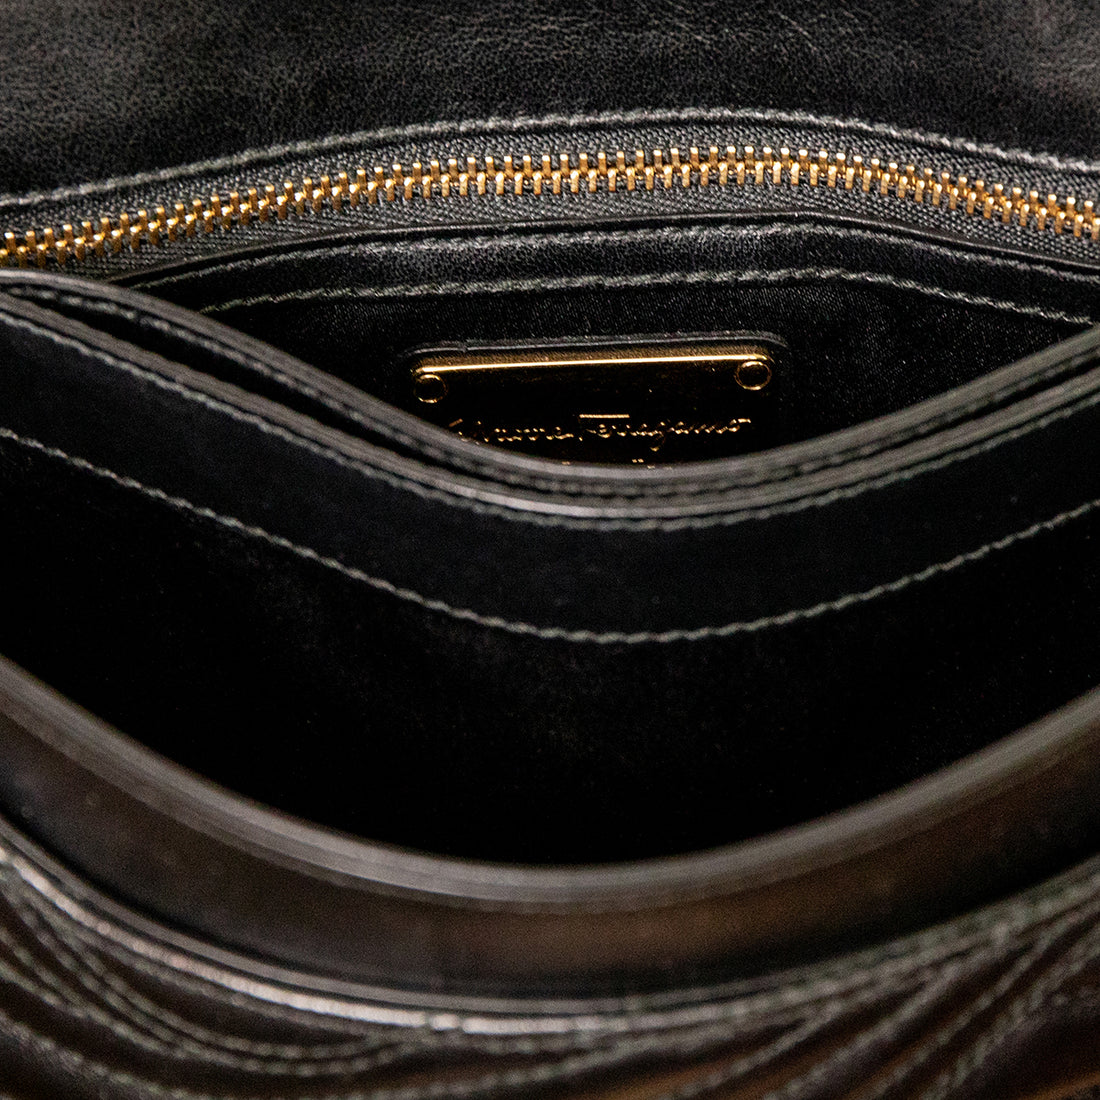 Salvatore Ferragamo Black quilted shoulder bag with gold embellishments